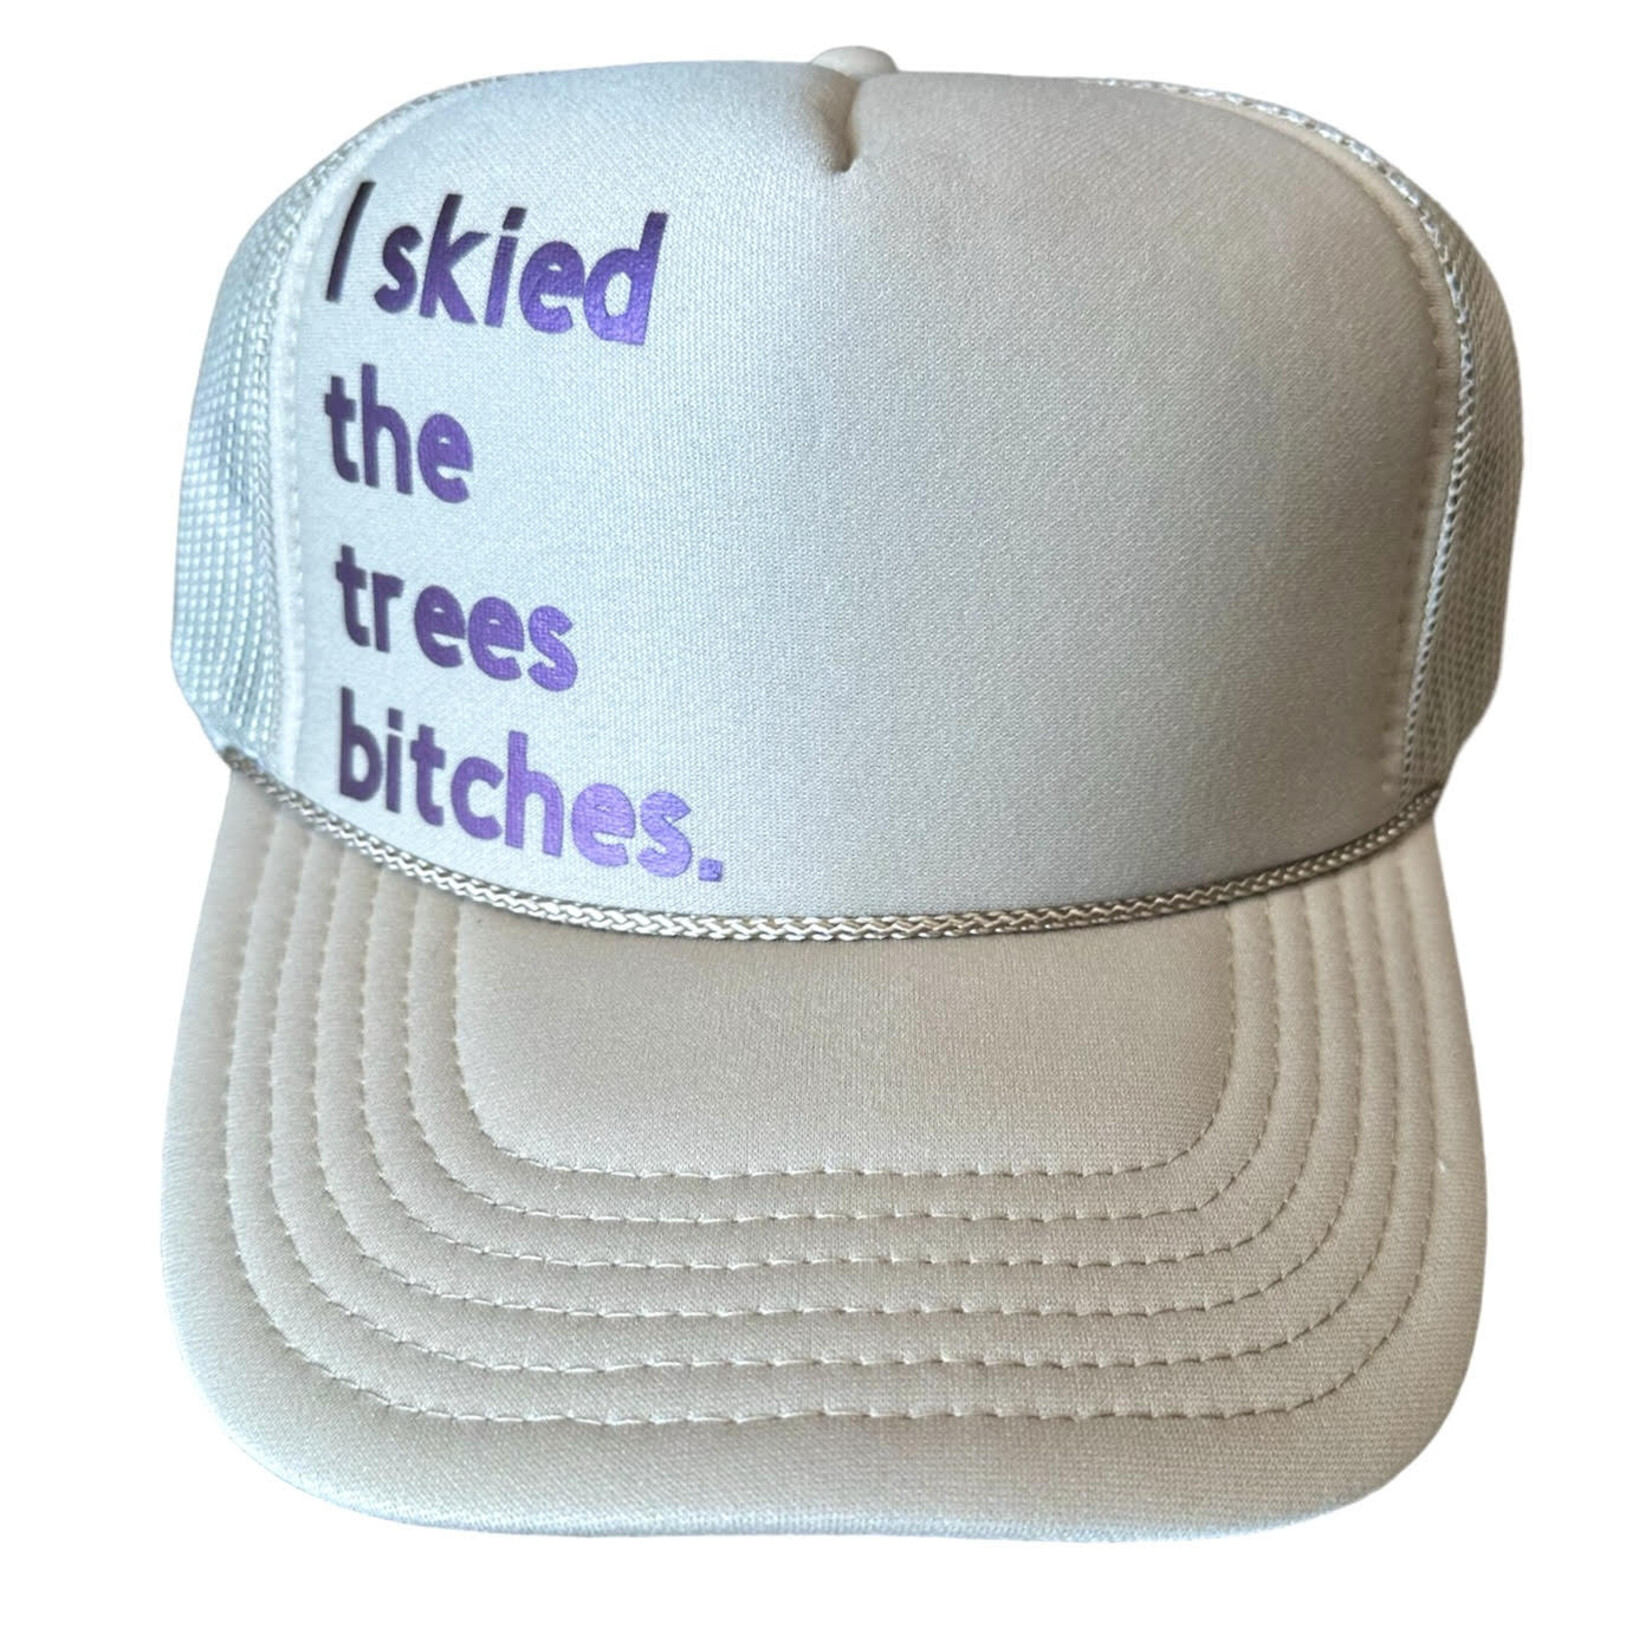 Après Babe Après Babe “I skied the trees” Trucker Hat